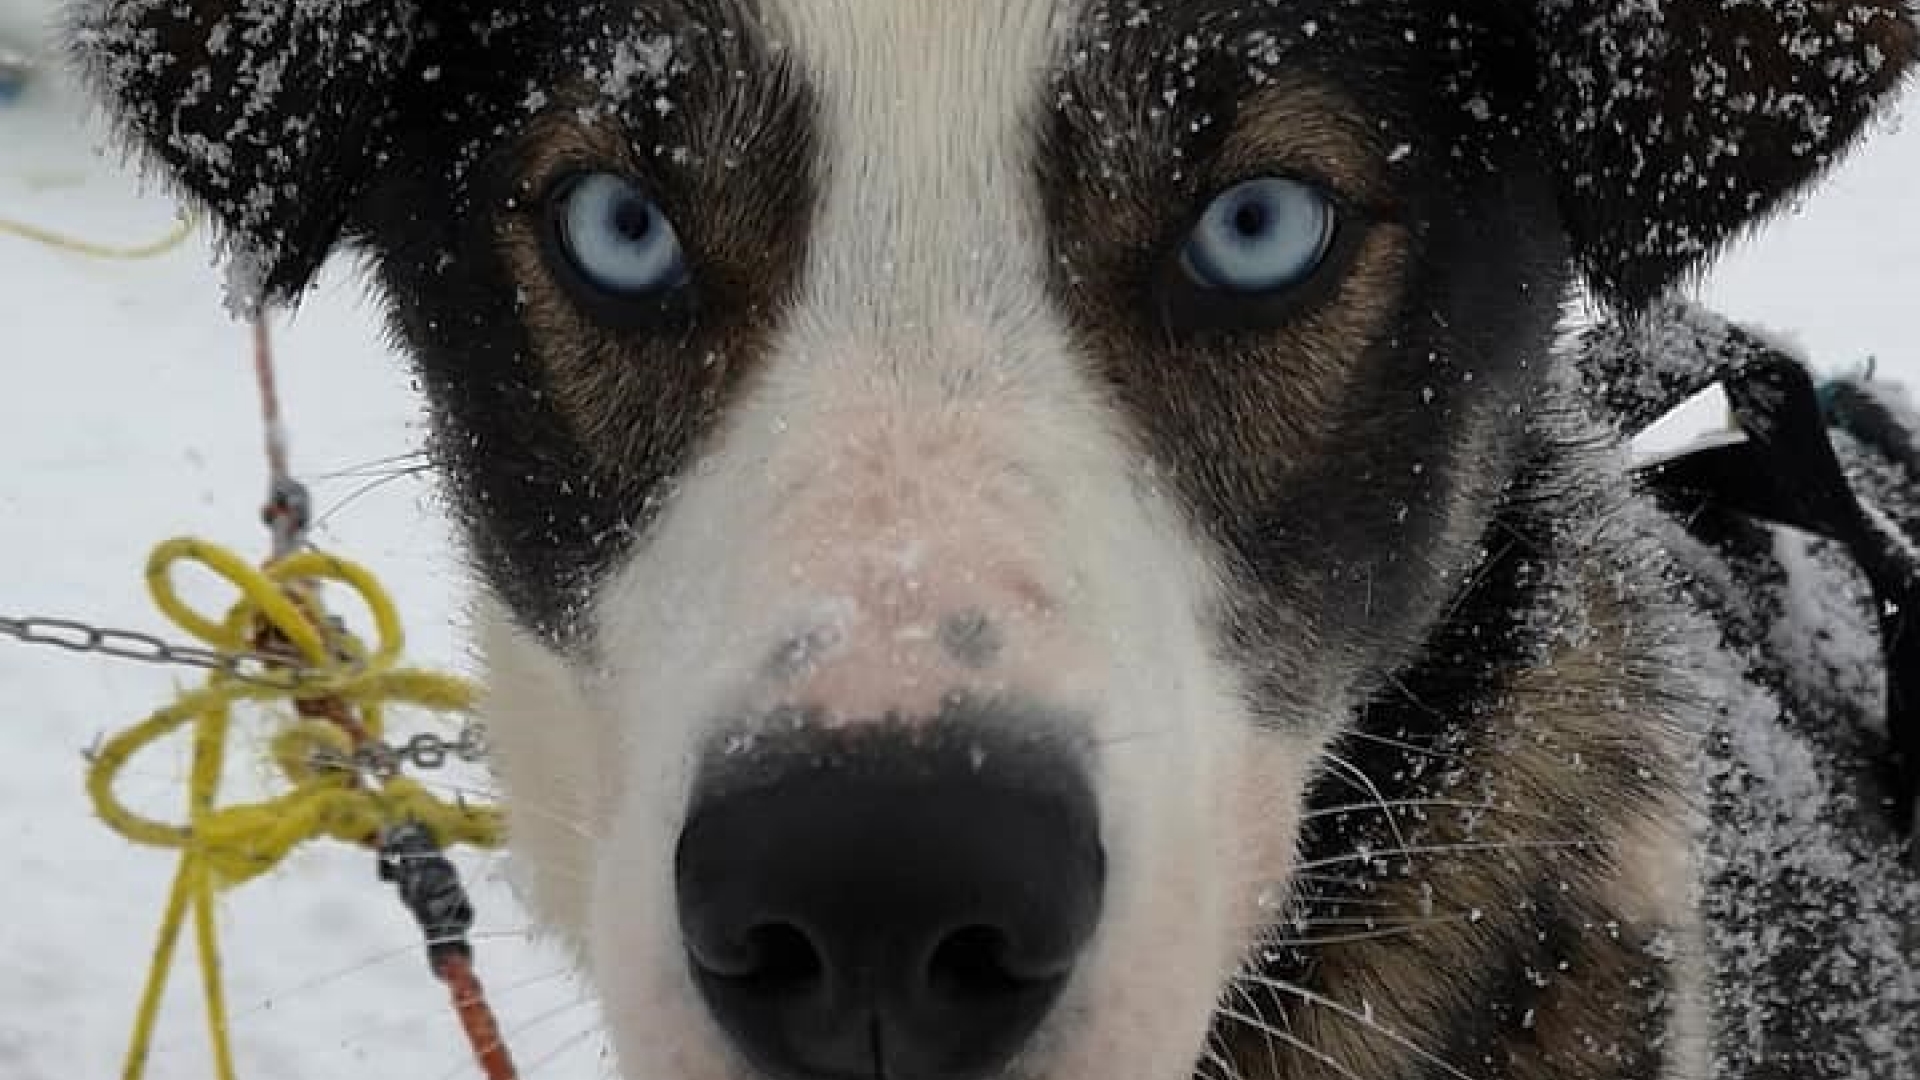 Husky with blue eyes